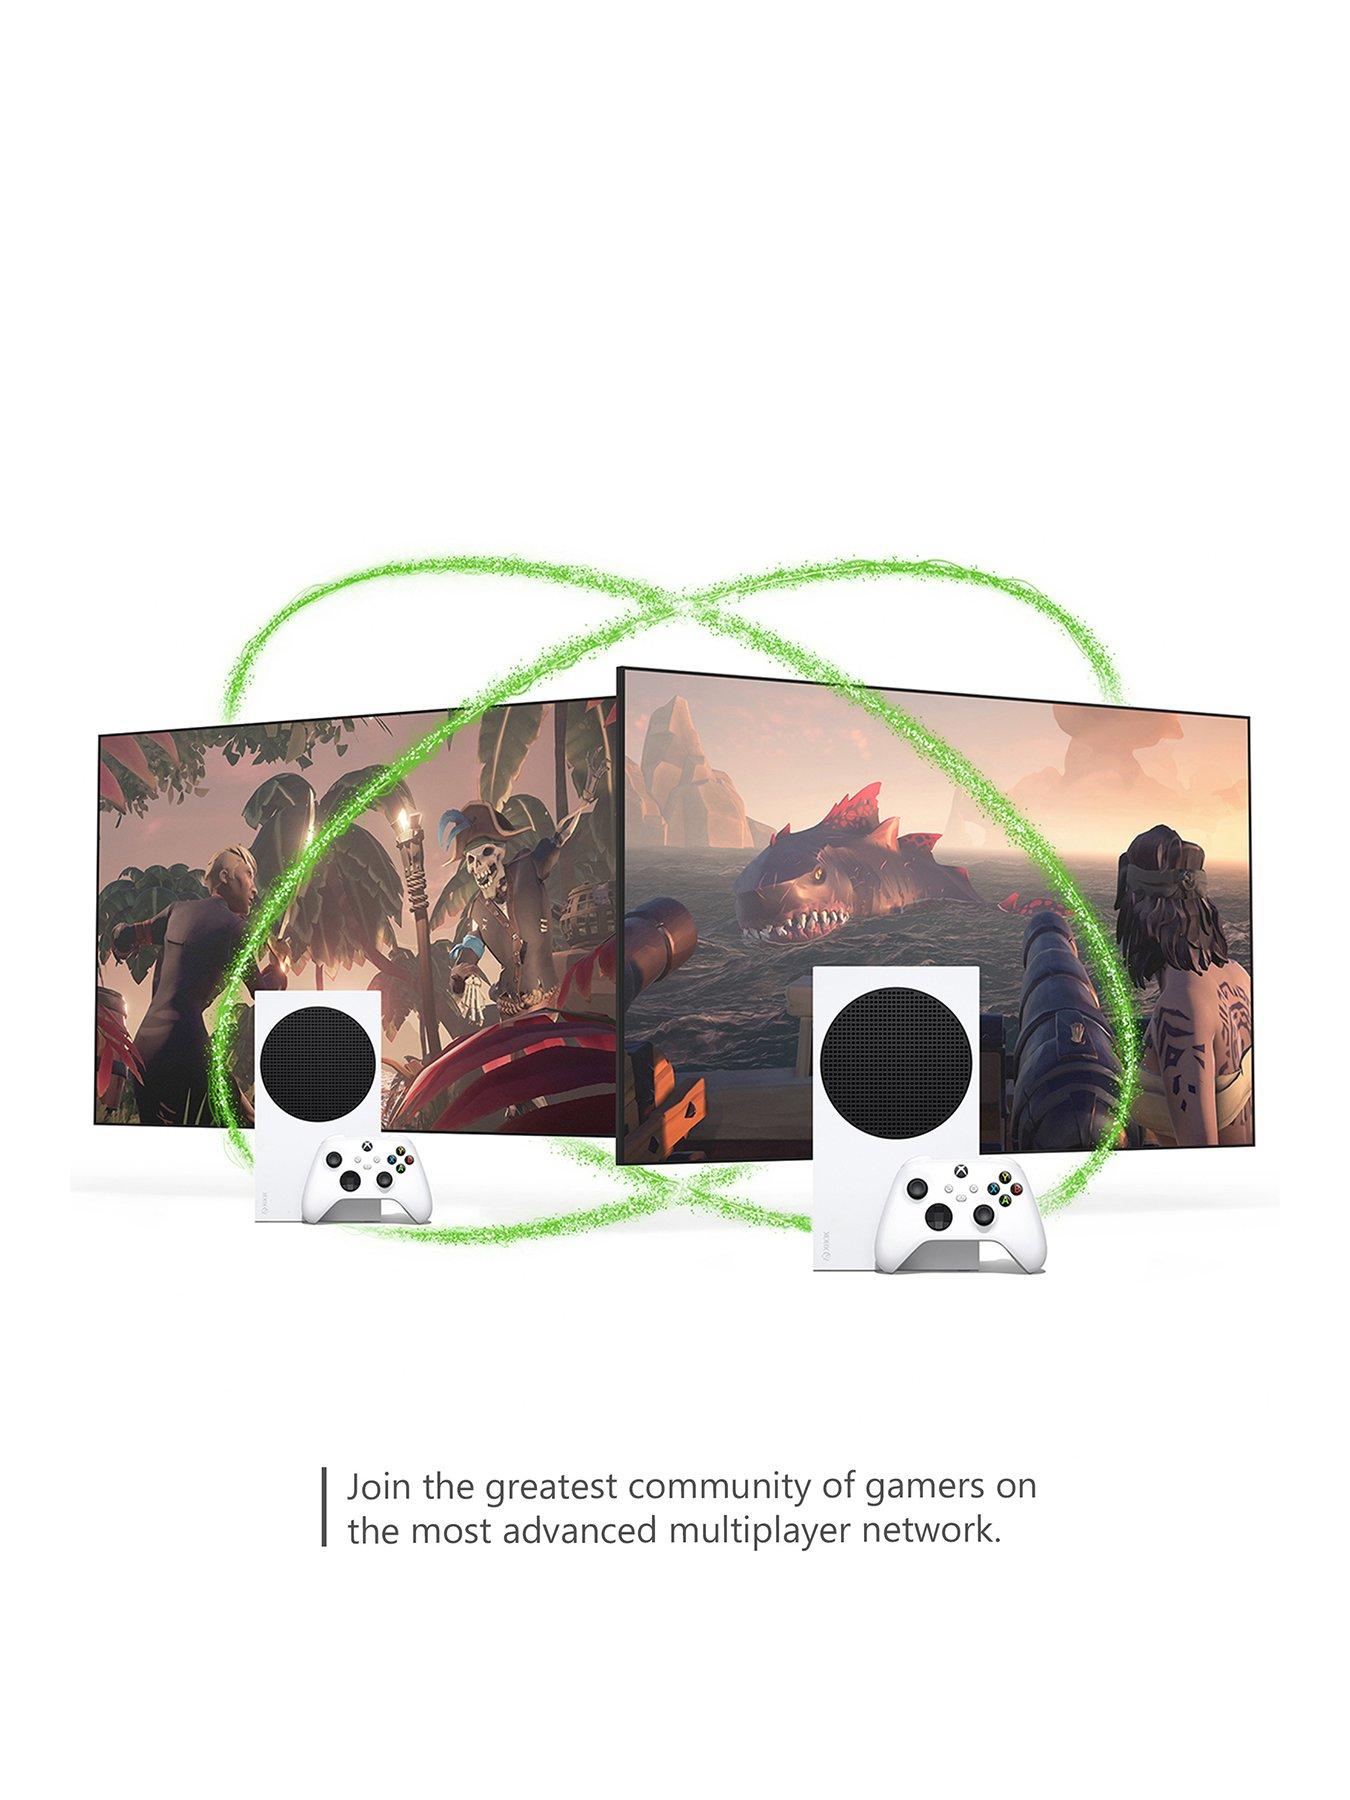 Xbox Live 12 Month Gold Membership - [Digital] 